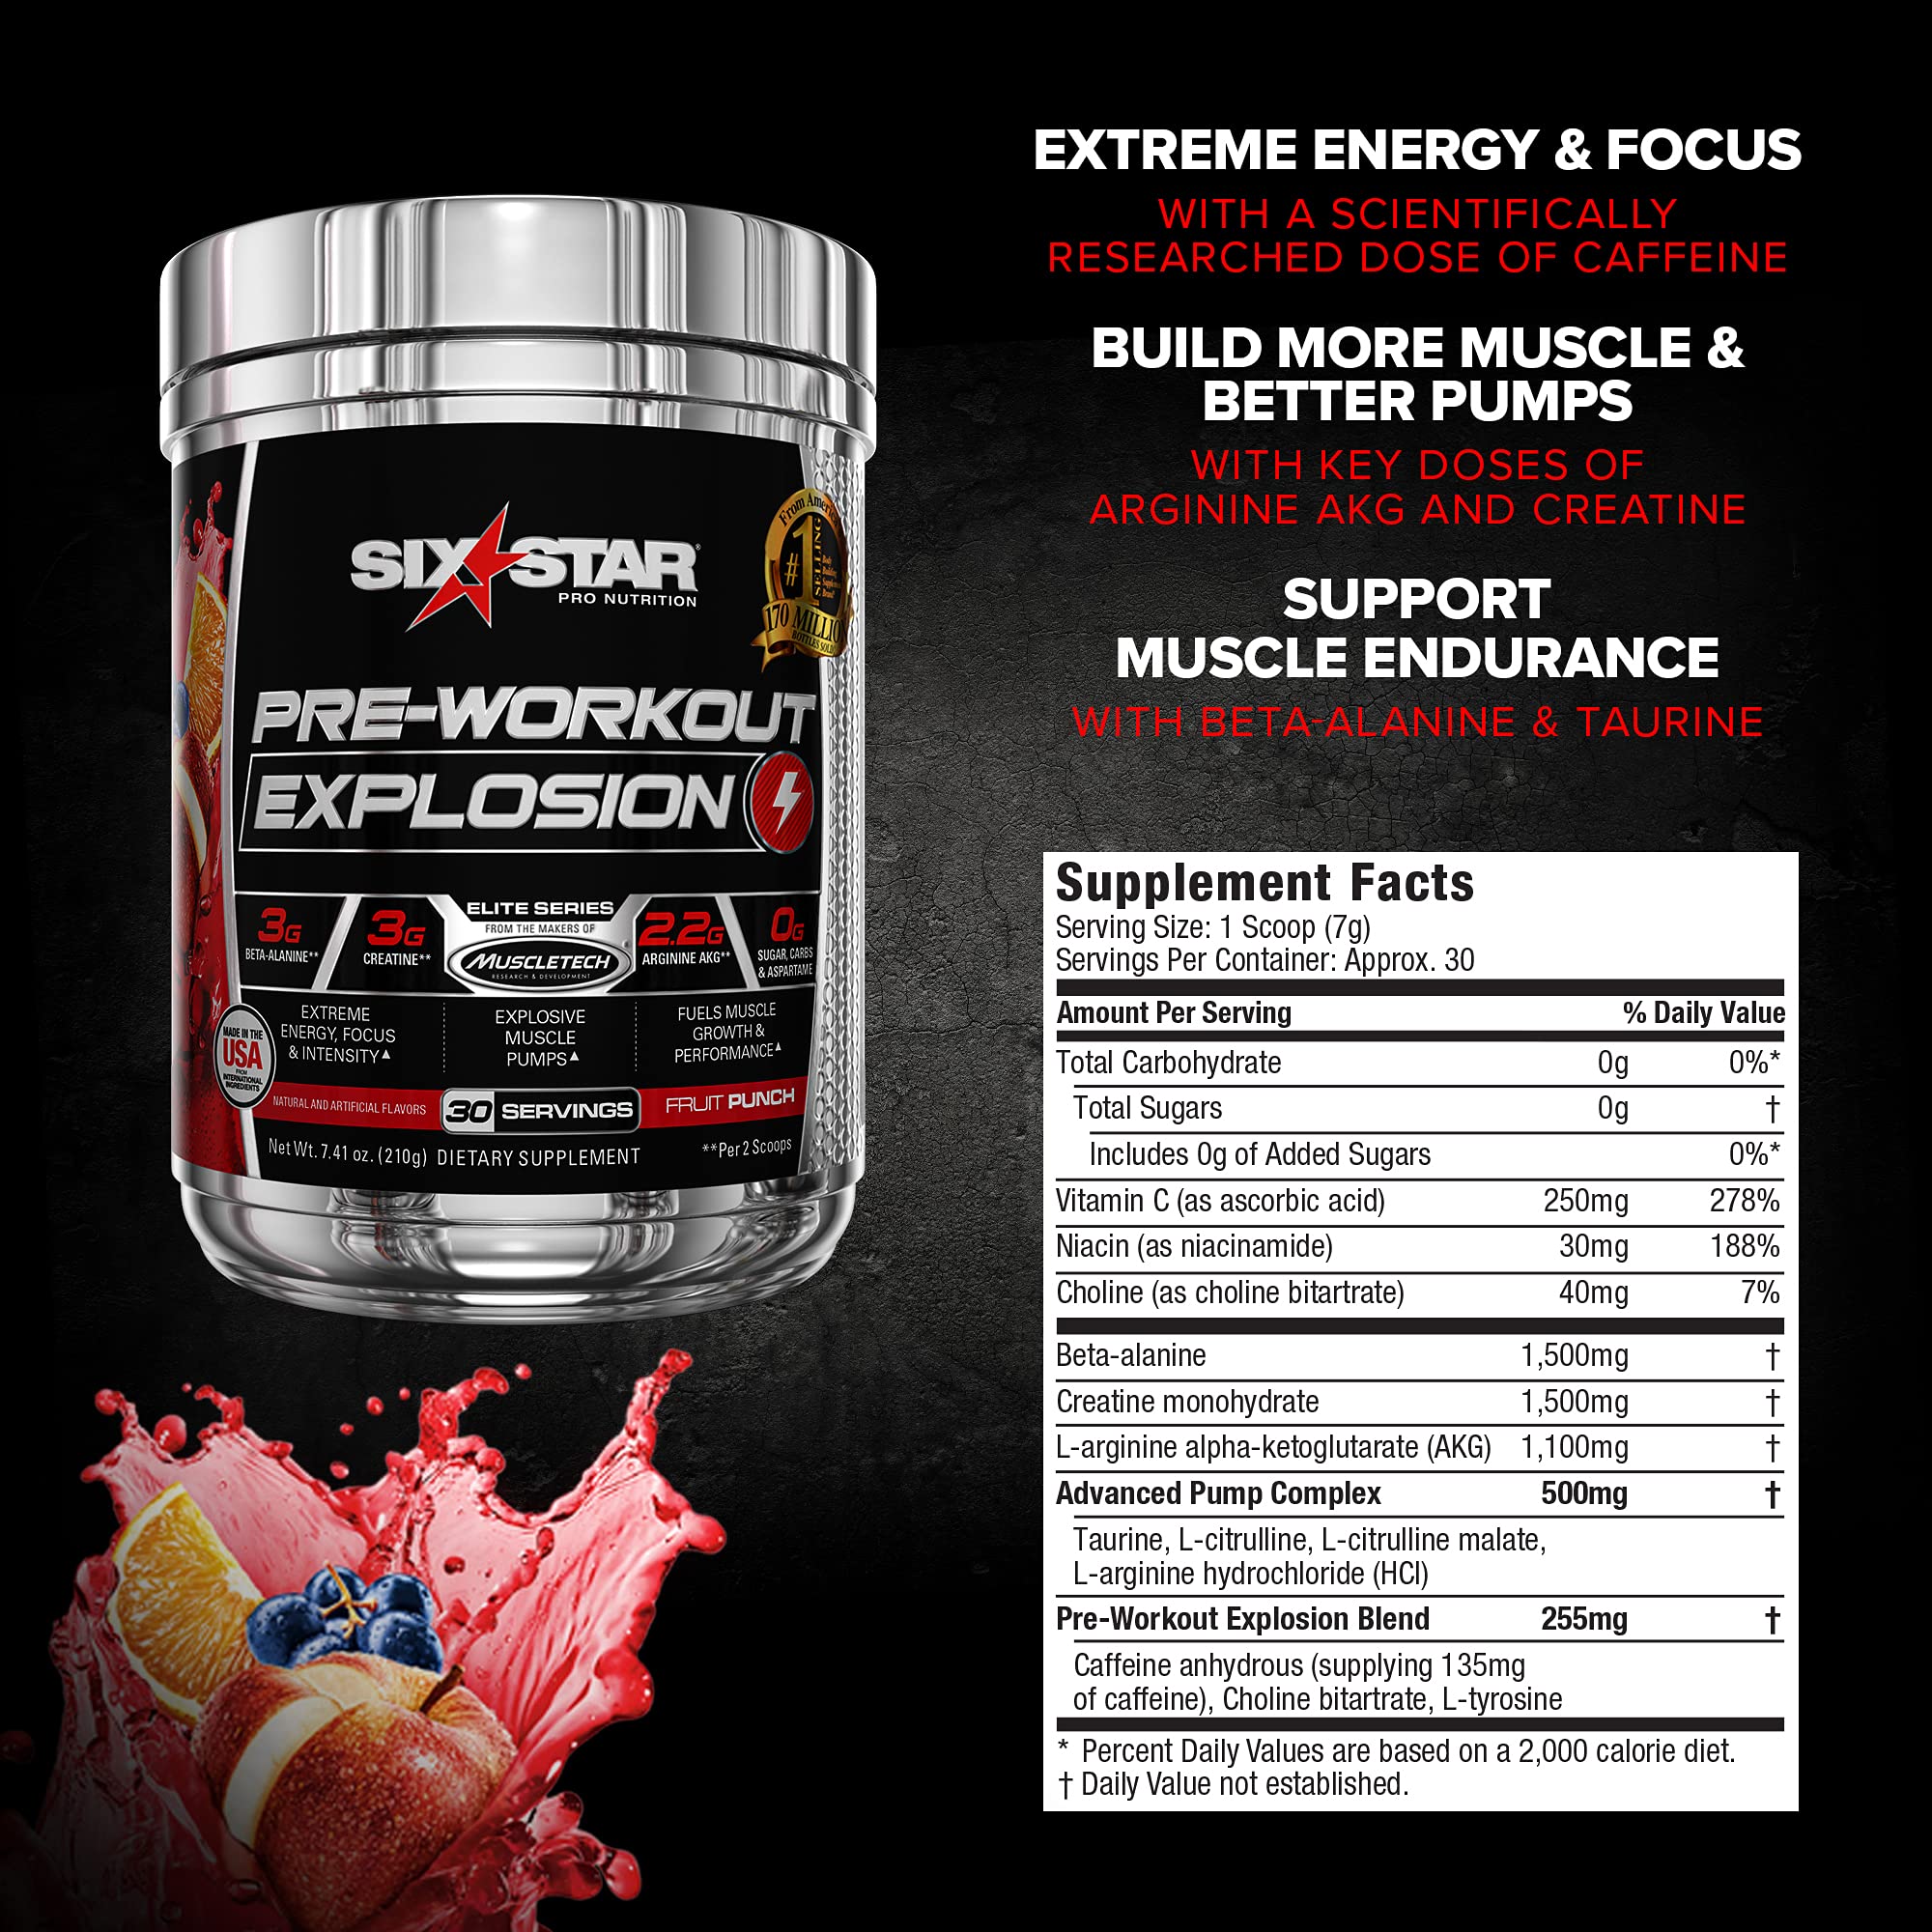 Six Star Pre Workout PreWorkout Explosion | Pre Workout Powder for Men & Women | PreWorkout Energy Powder Drink Mix | Sports Nutrition Pre-Workout Products | Fruit Punch (30 Servings)